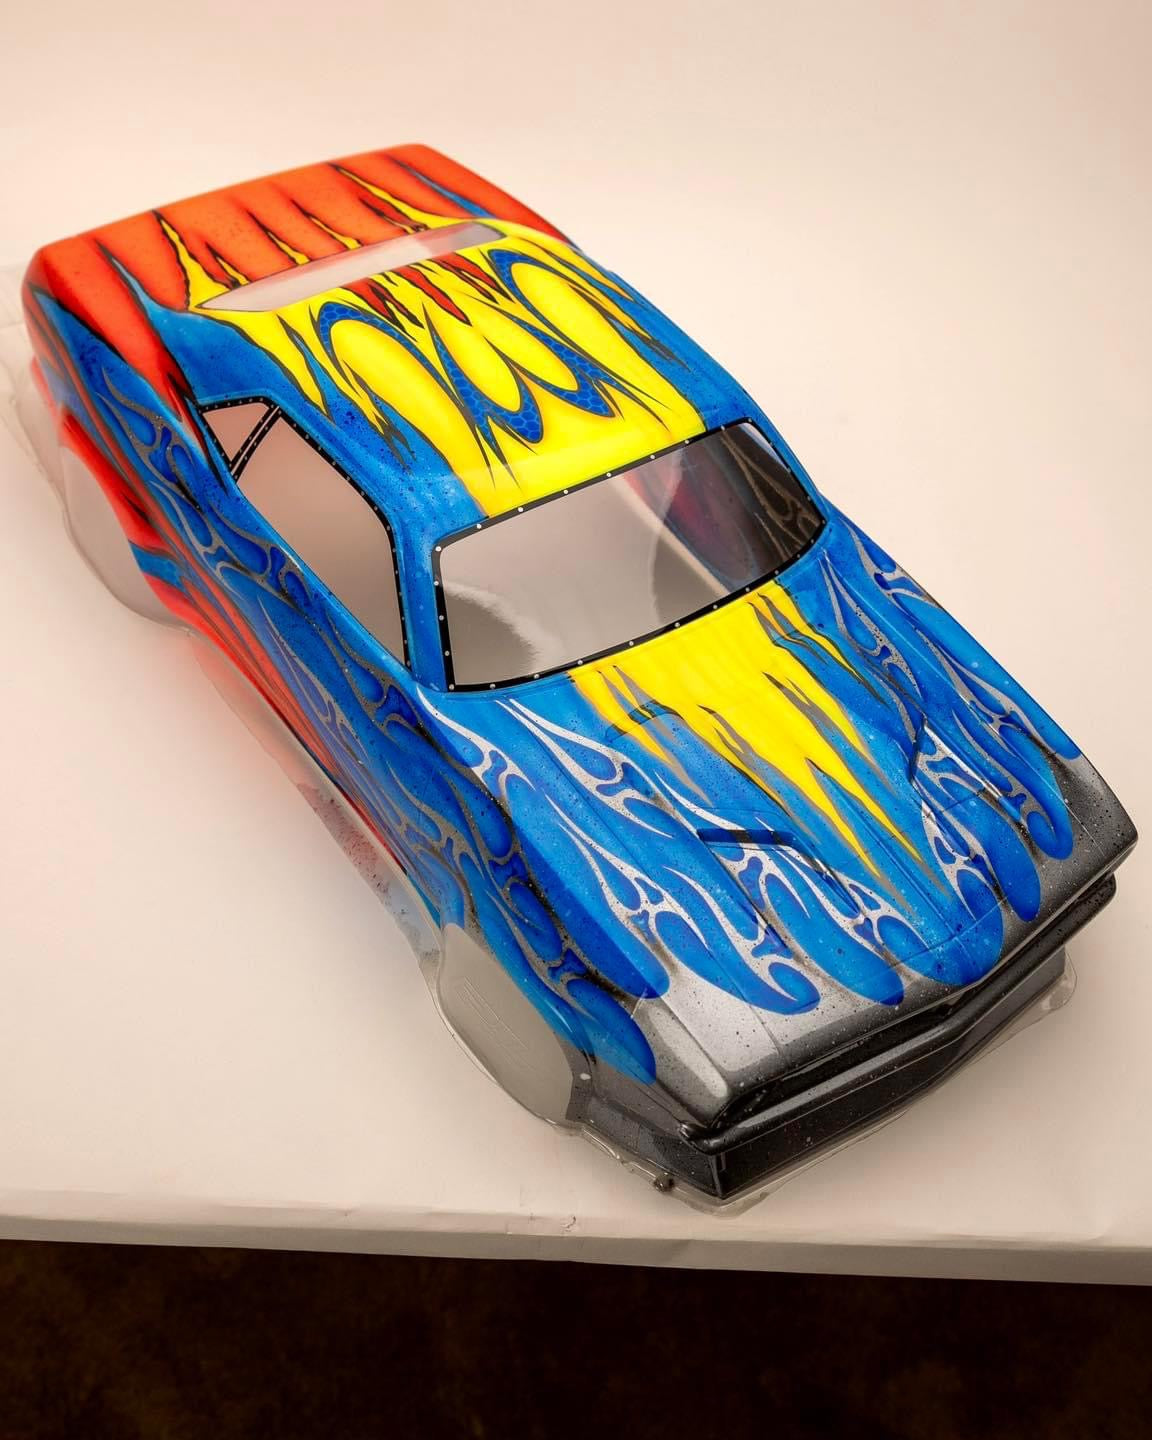 Custom painted drag body